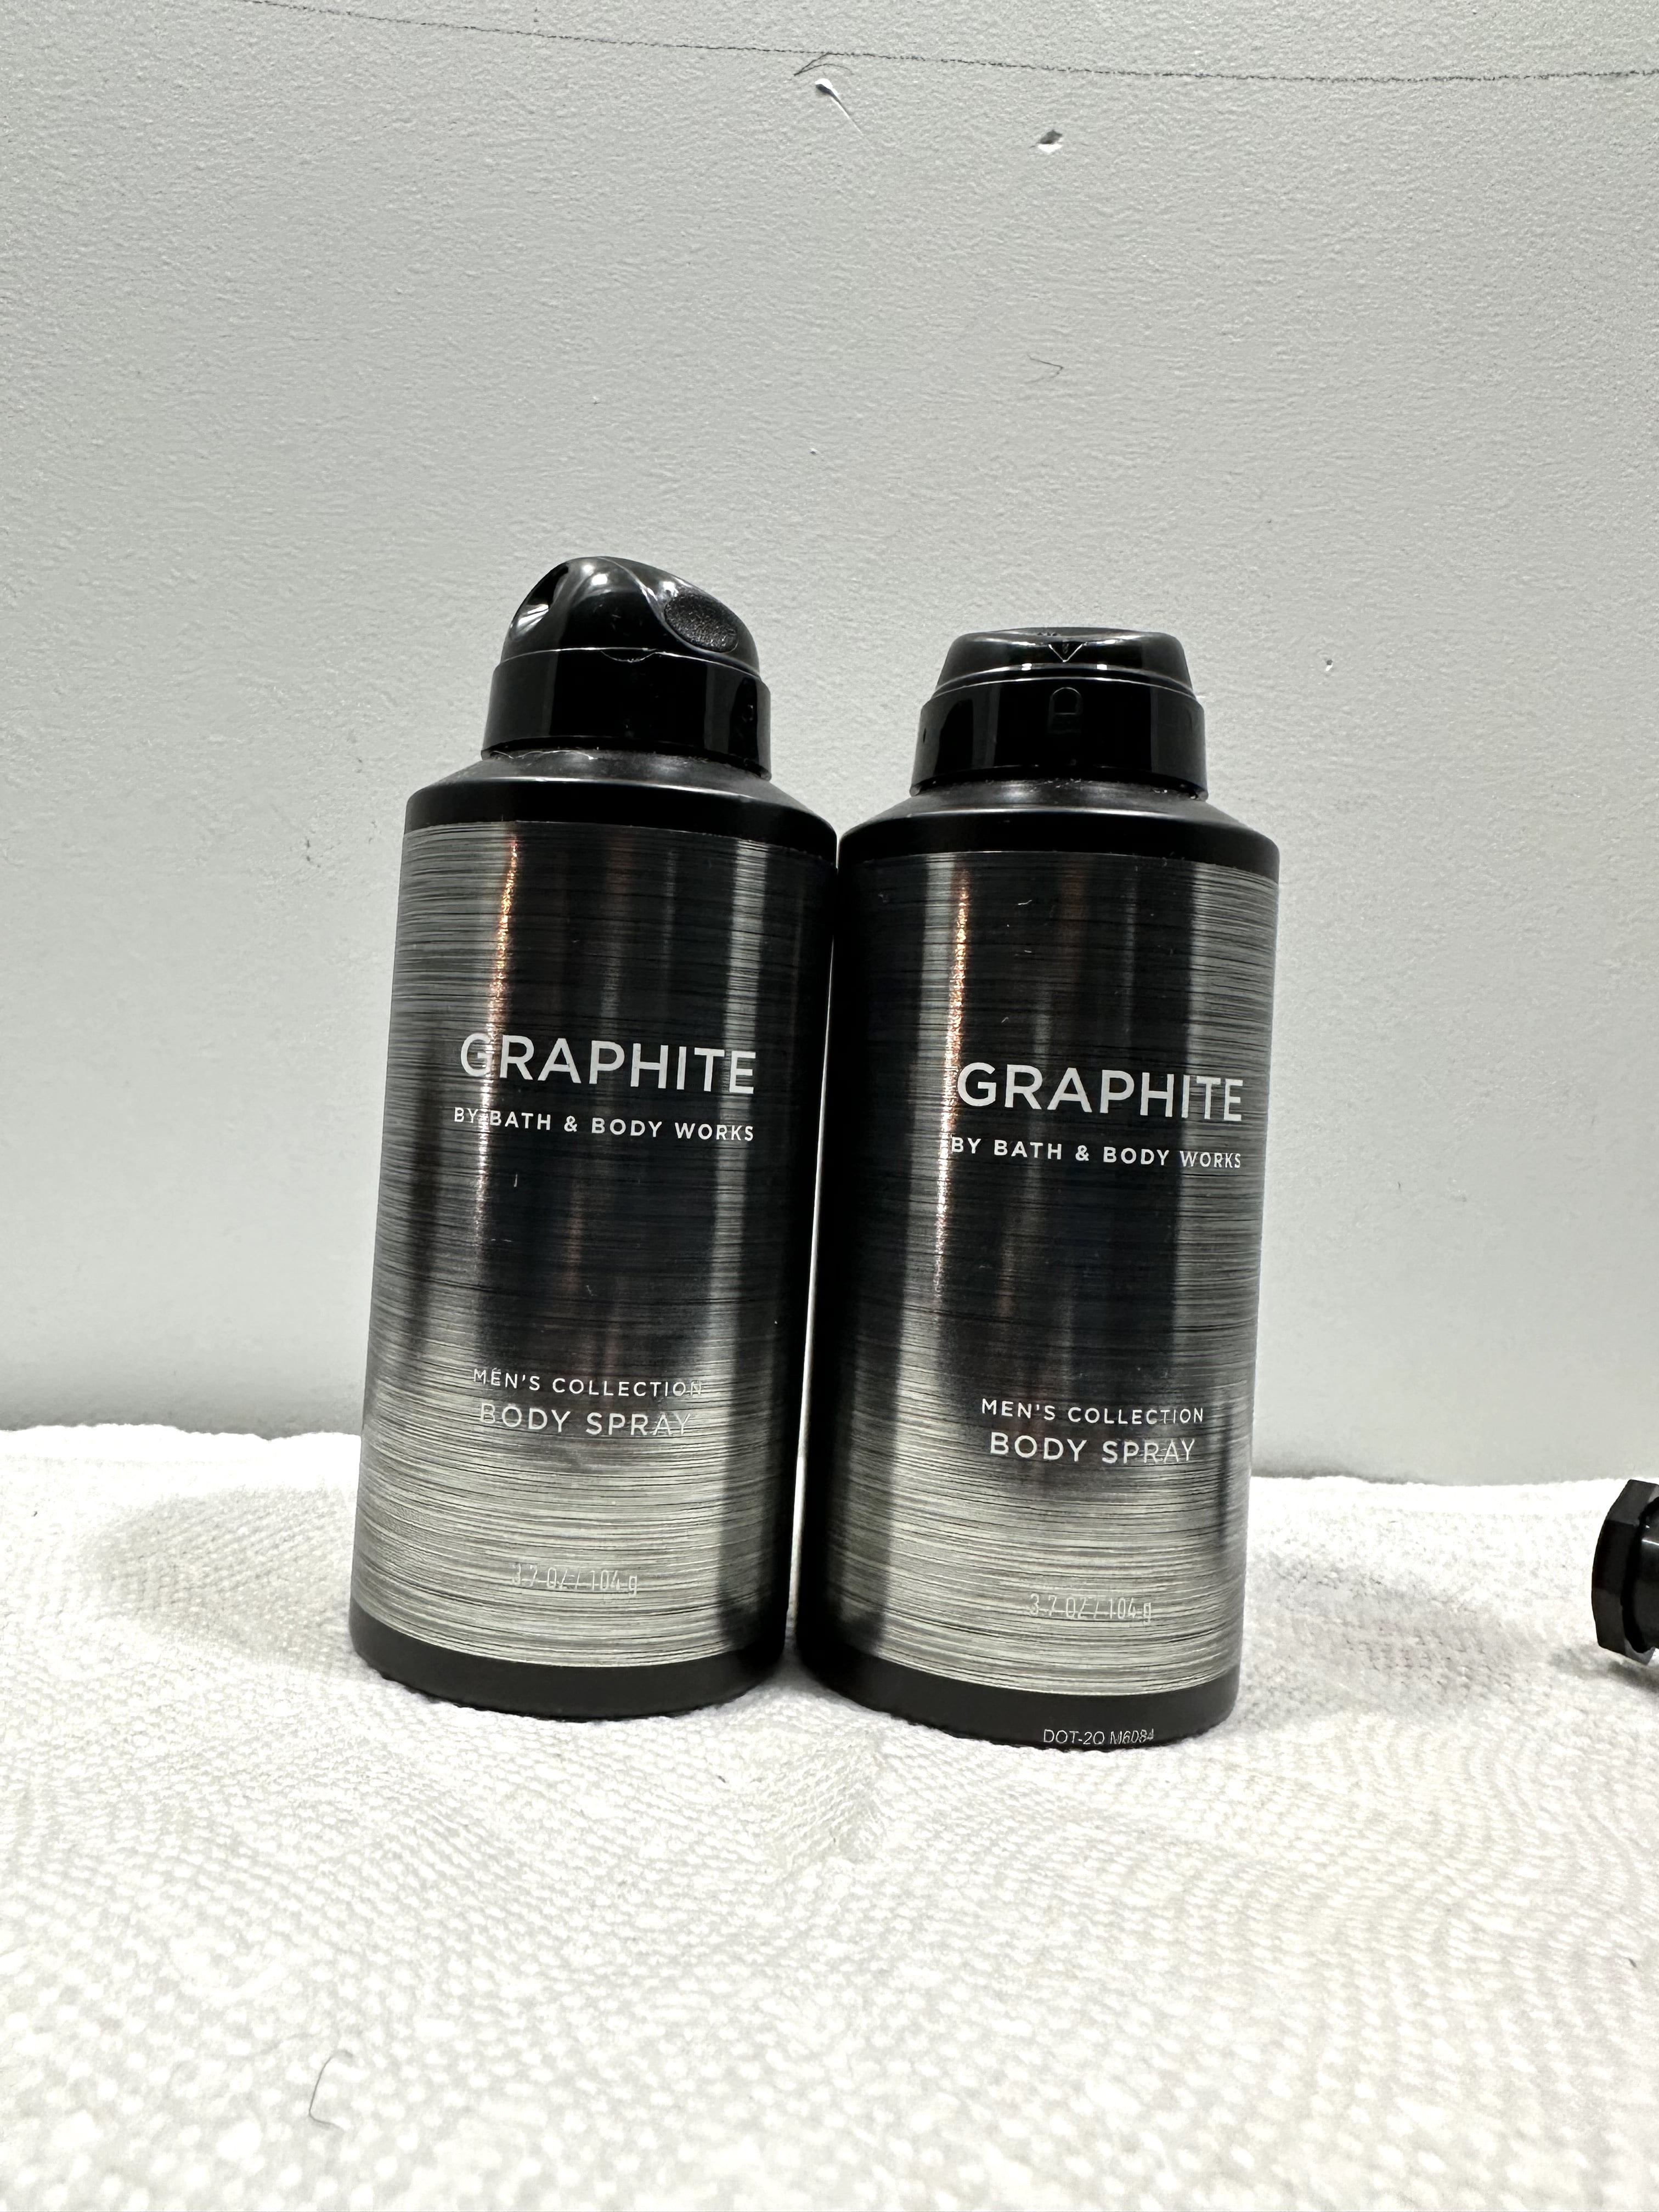 Bath & Body Works Graphite Men's Collection Body Spray 3.7 oz Lot of 2 